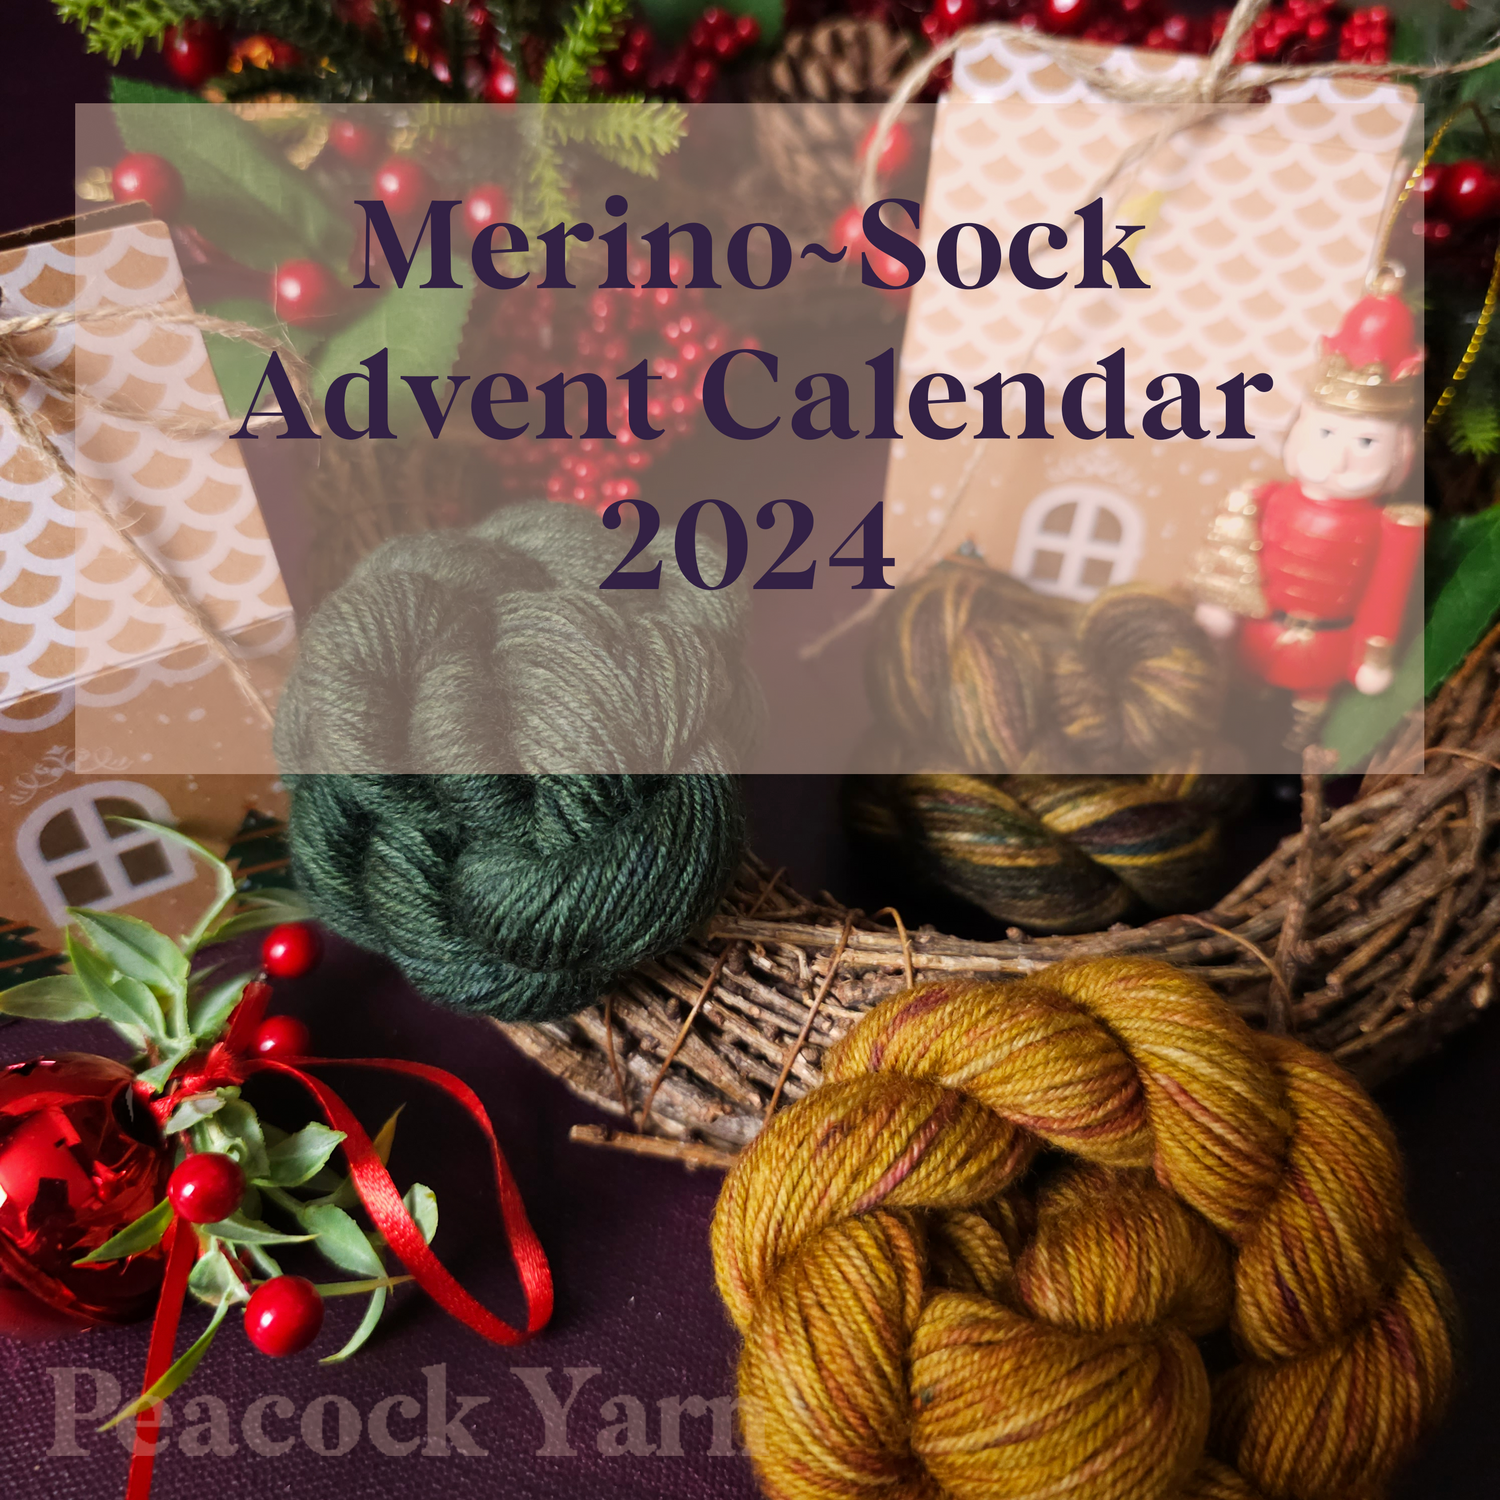 Merino-Sock Advent Calendar